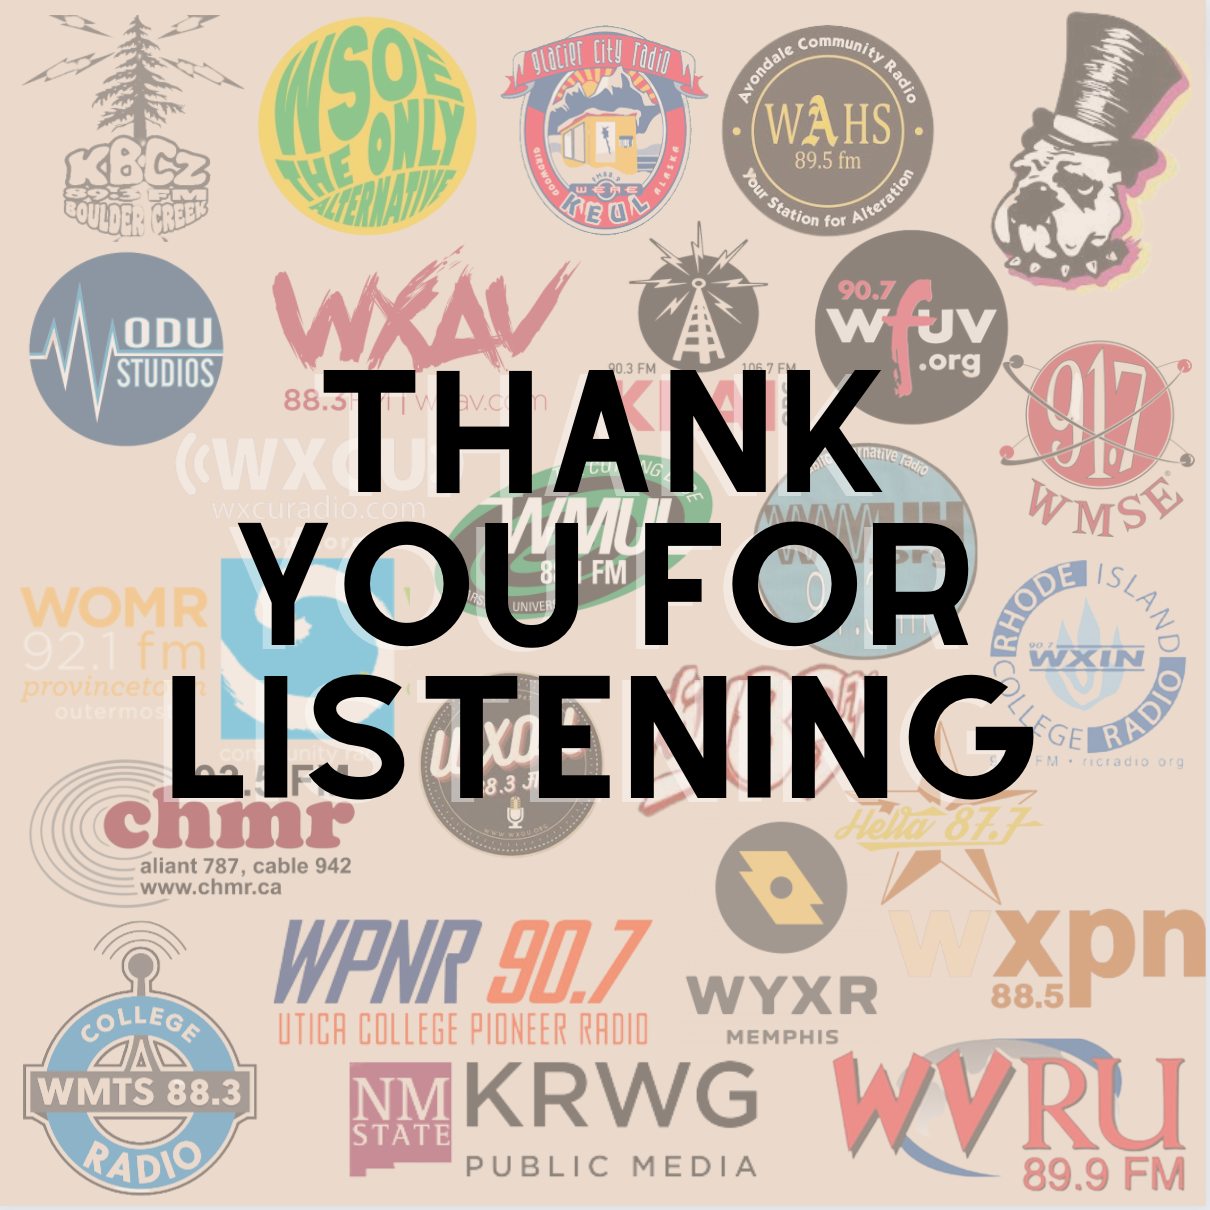 Radio Stations thank you image